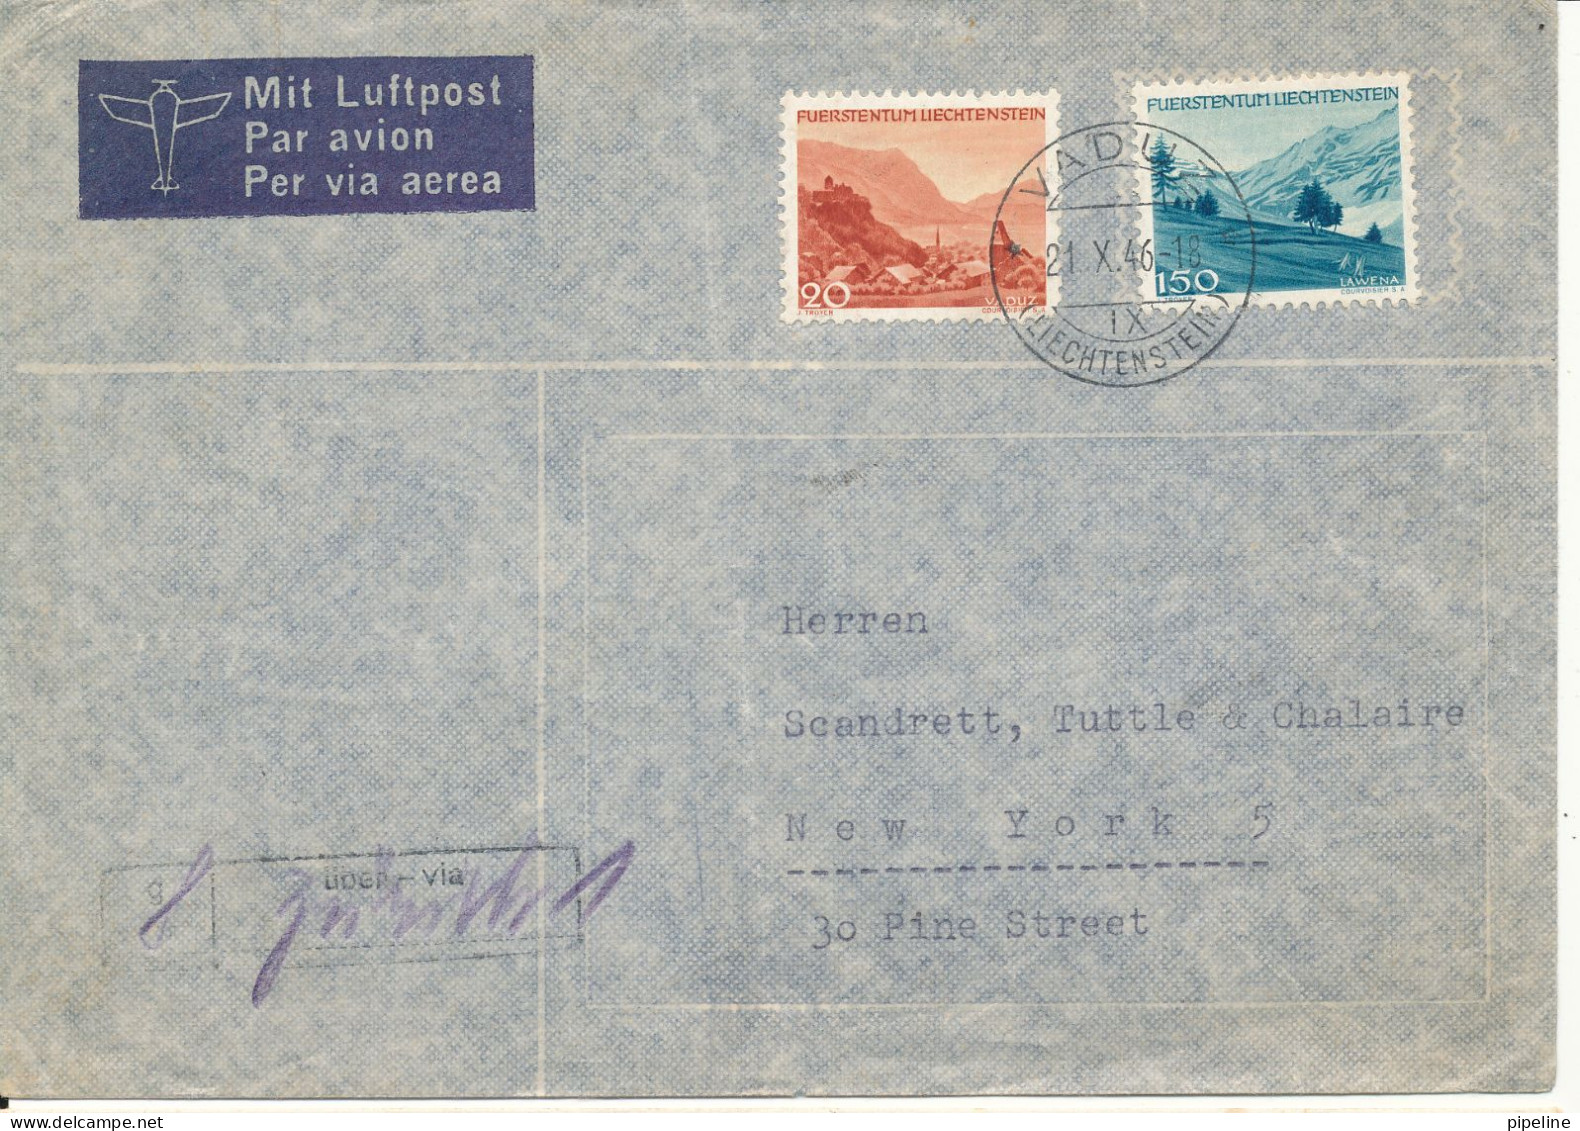 Liechtenstein Air Mail Cover Sent To USA 21-10-1946 Very Good Franked - Poste Aérienne